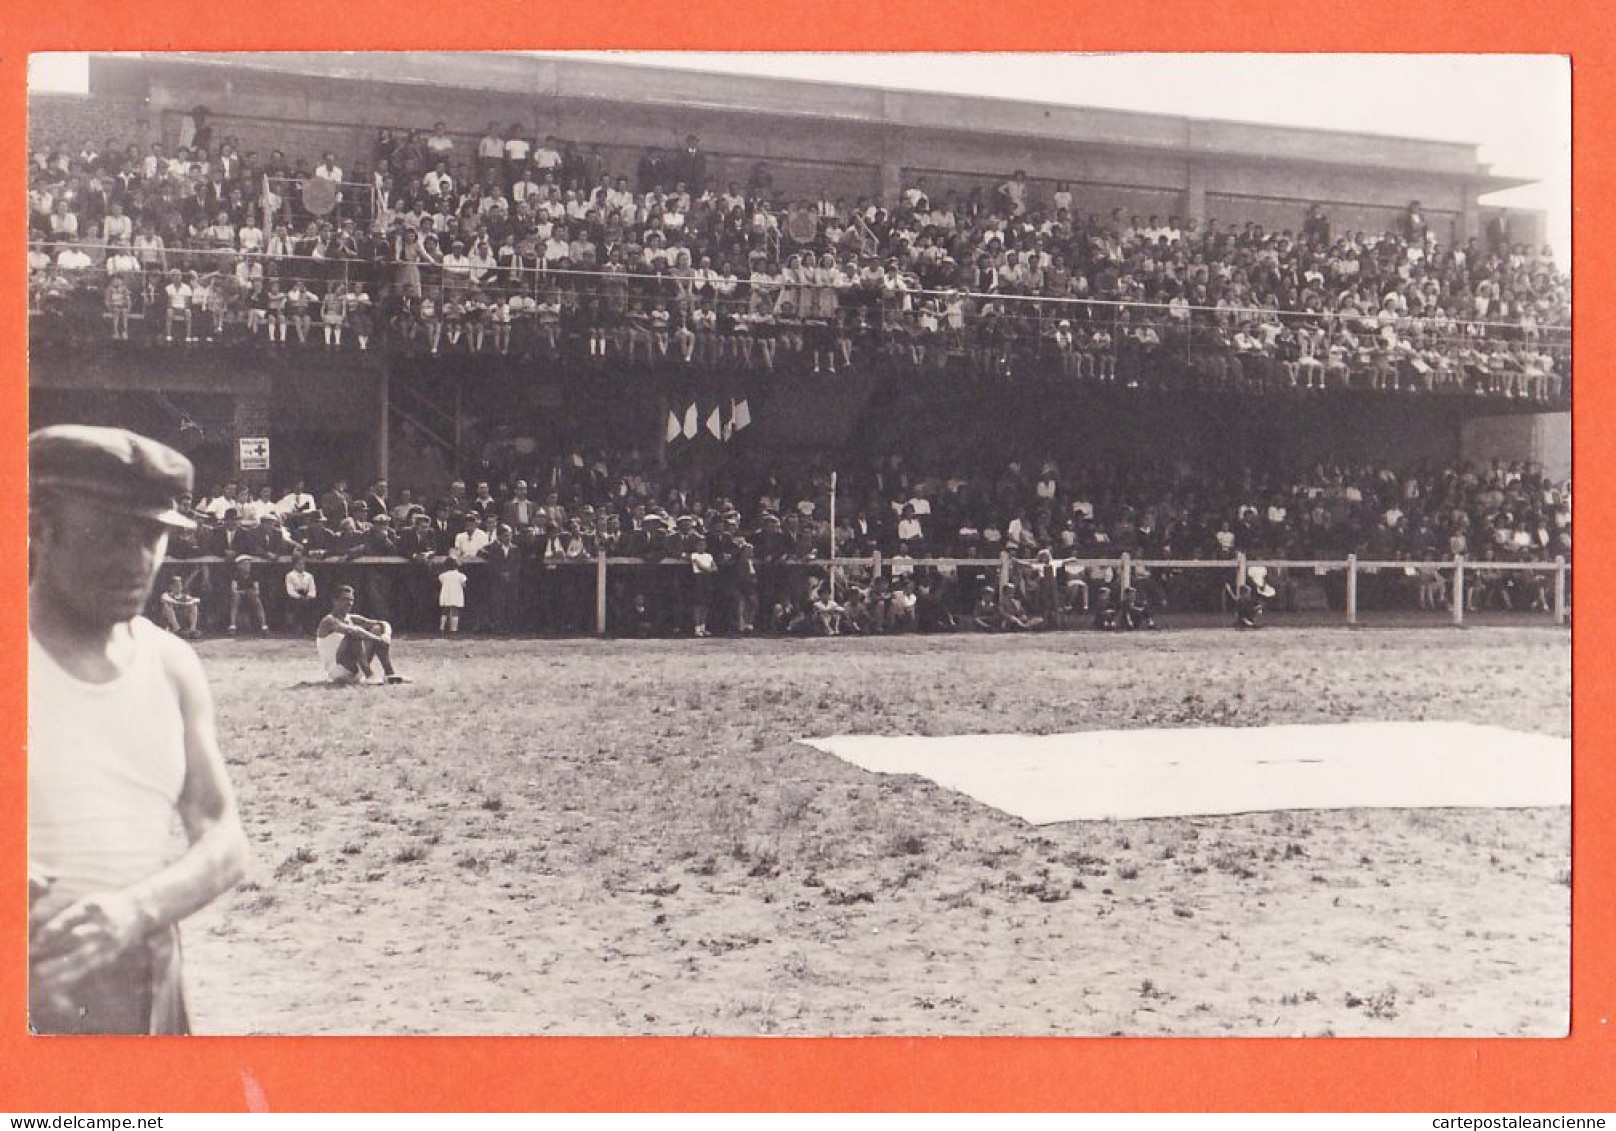 05481 / ⭐ ◉ Rare 92-MALAKOFF Carte-Photo 3/11 Tribune Concours Gymnastique Fête Sportive Stadium Stade Municipal 1940s  - Malakoff